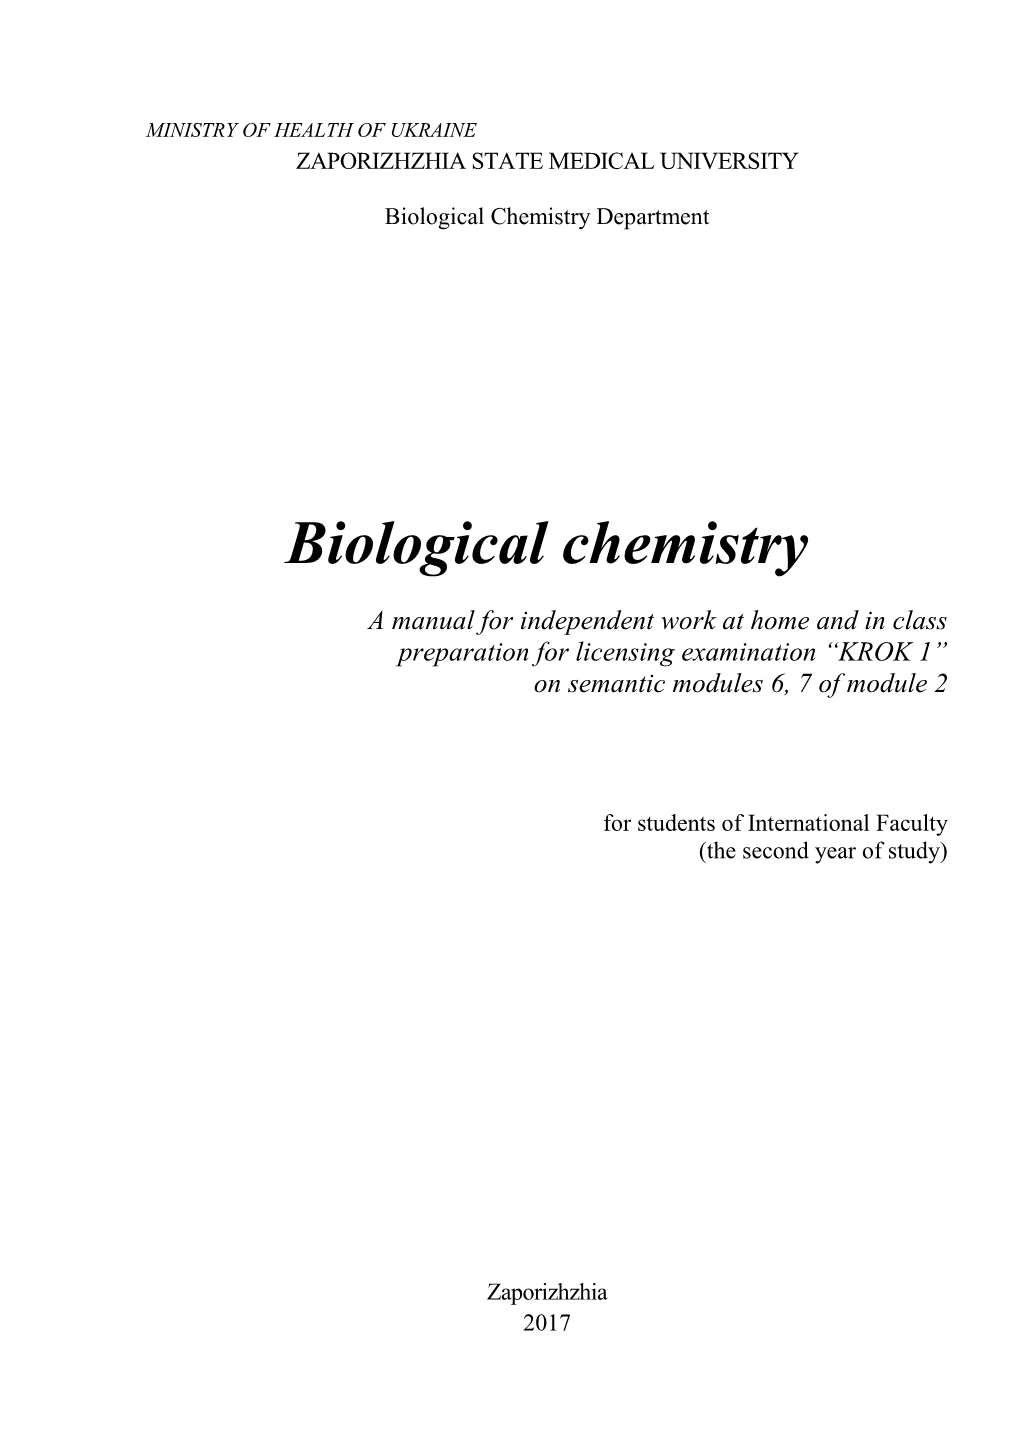 Biological Chemistry Department